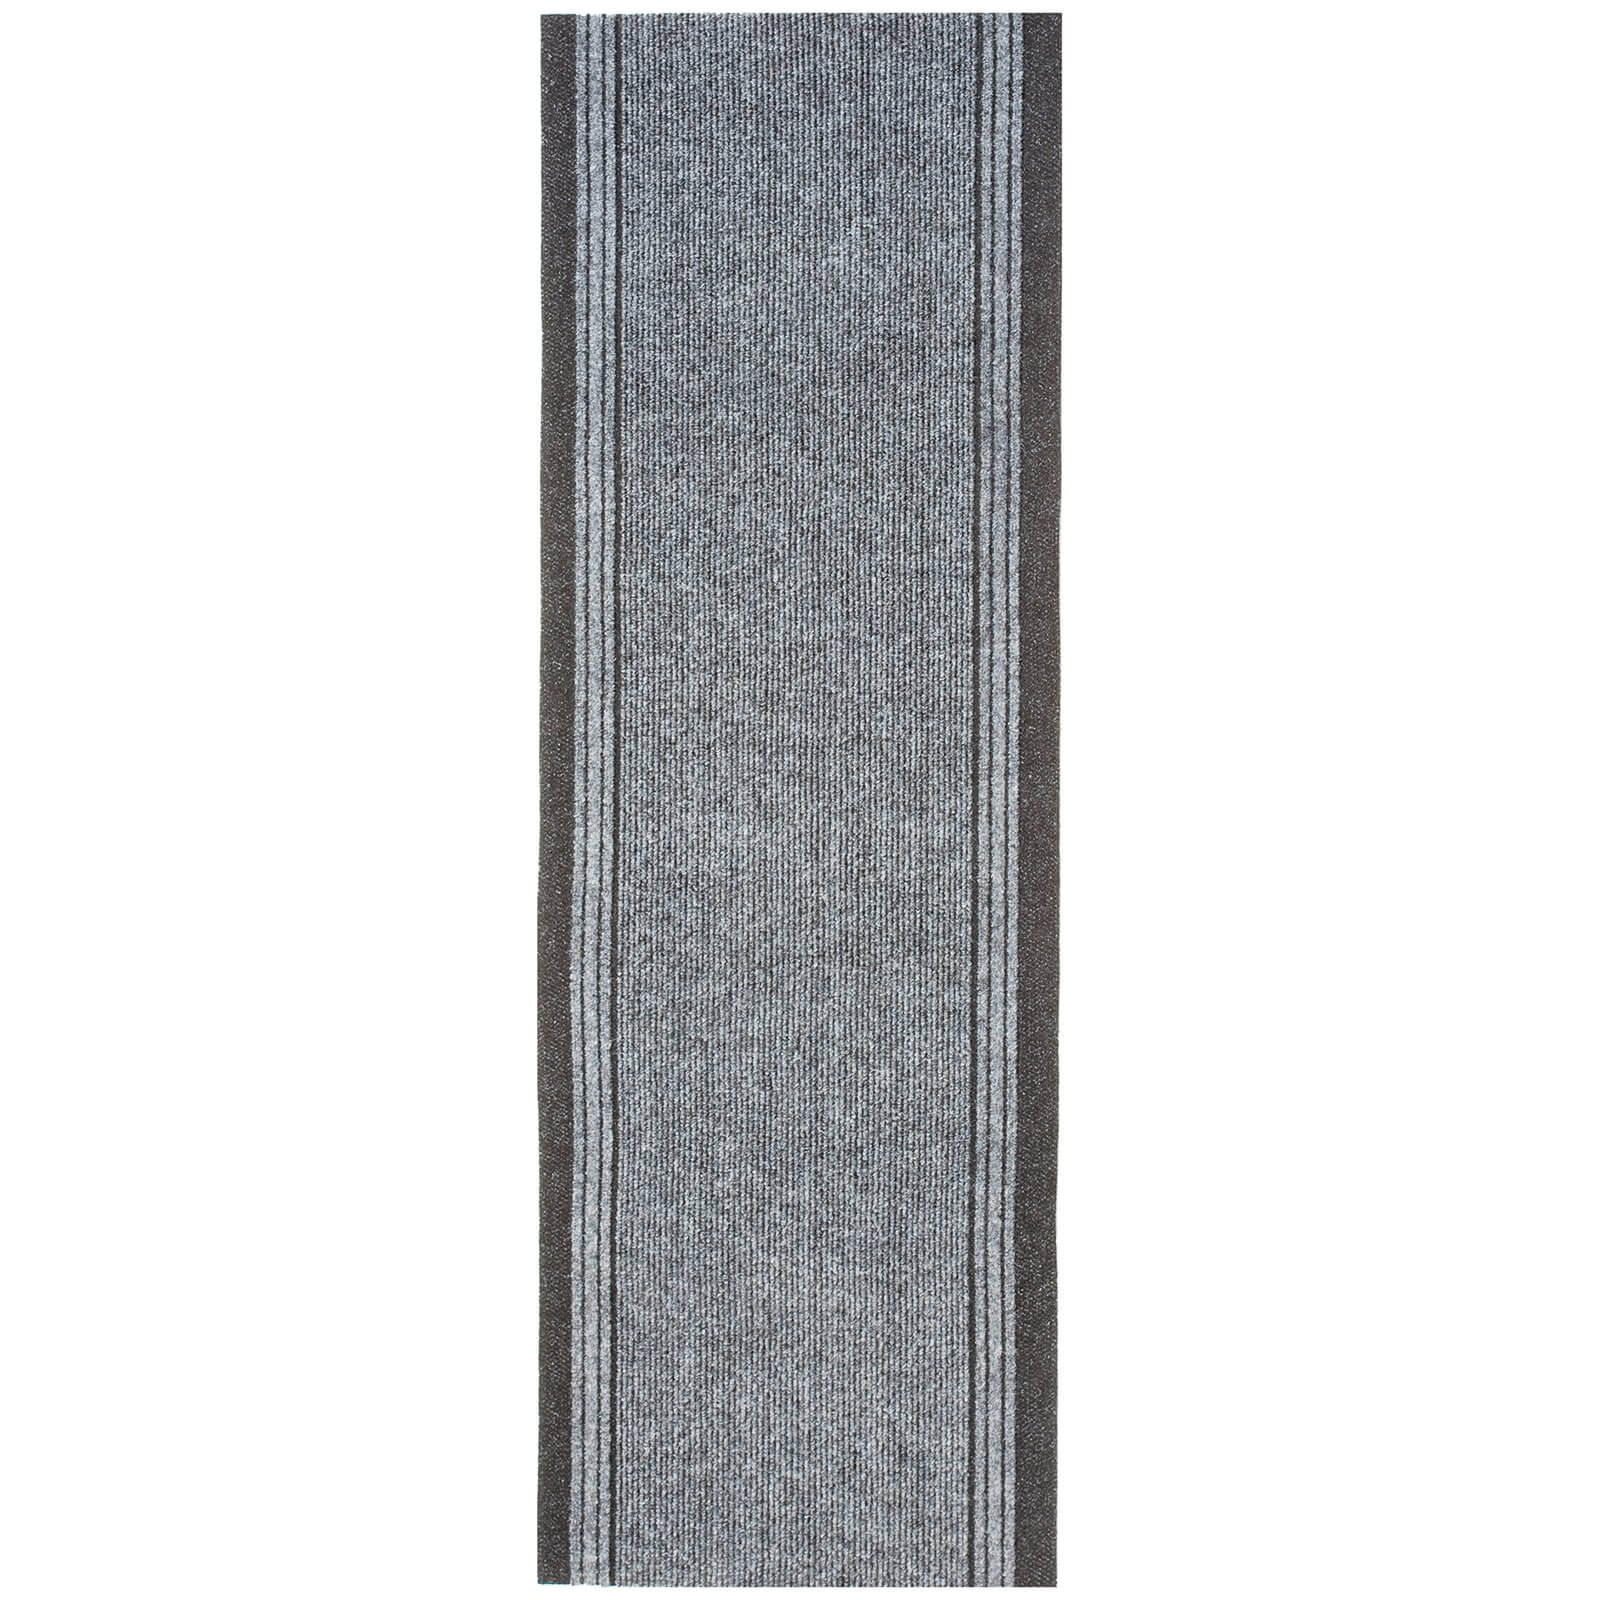 Striped Border Runner - Grey - 66x183cm